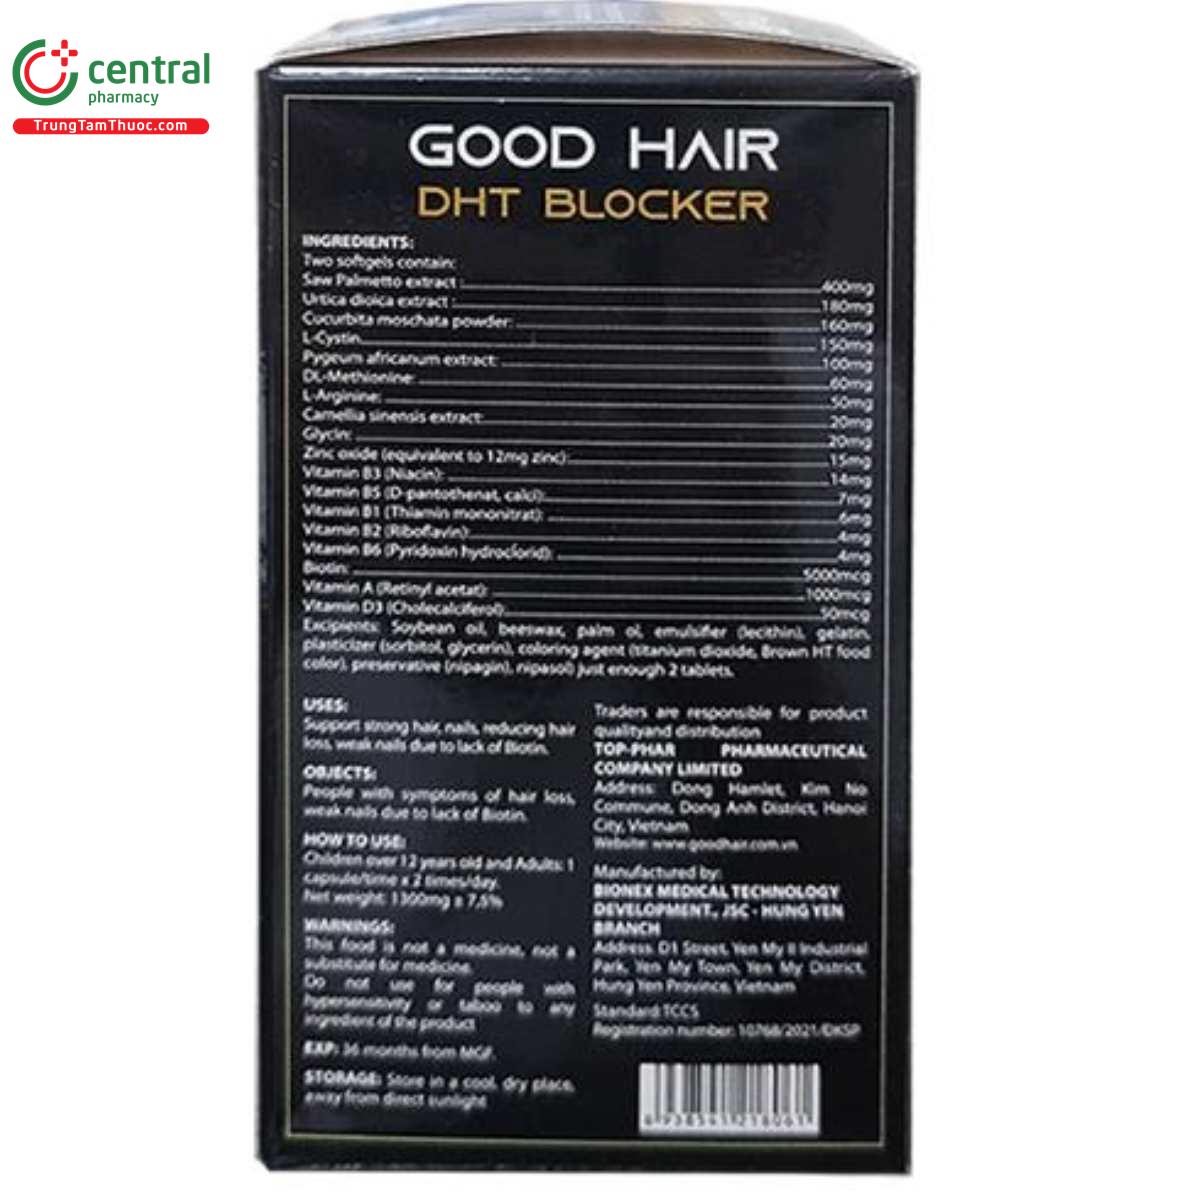 good hair dht blocker 4 R7512